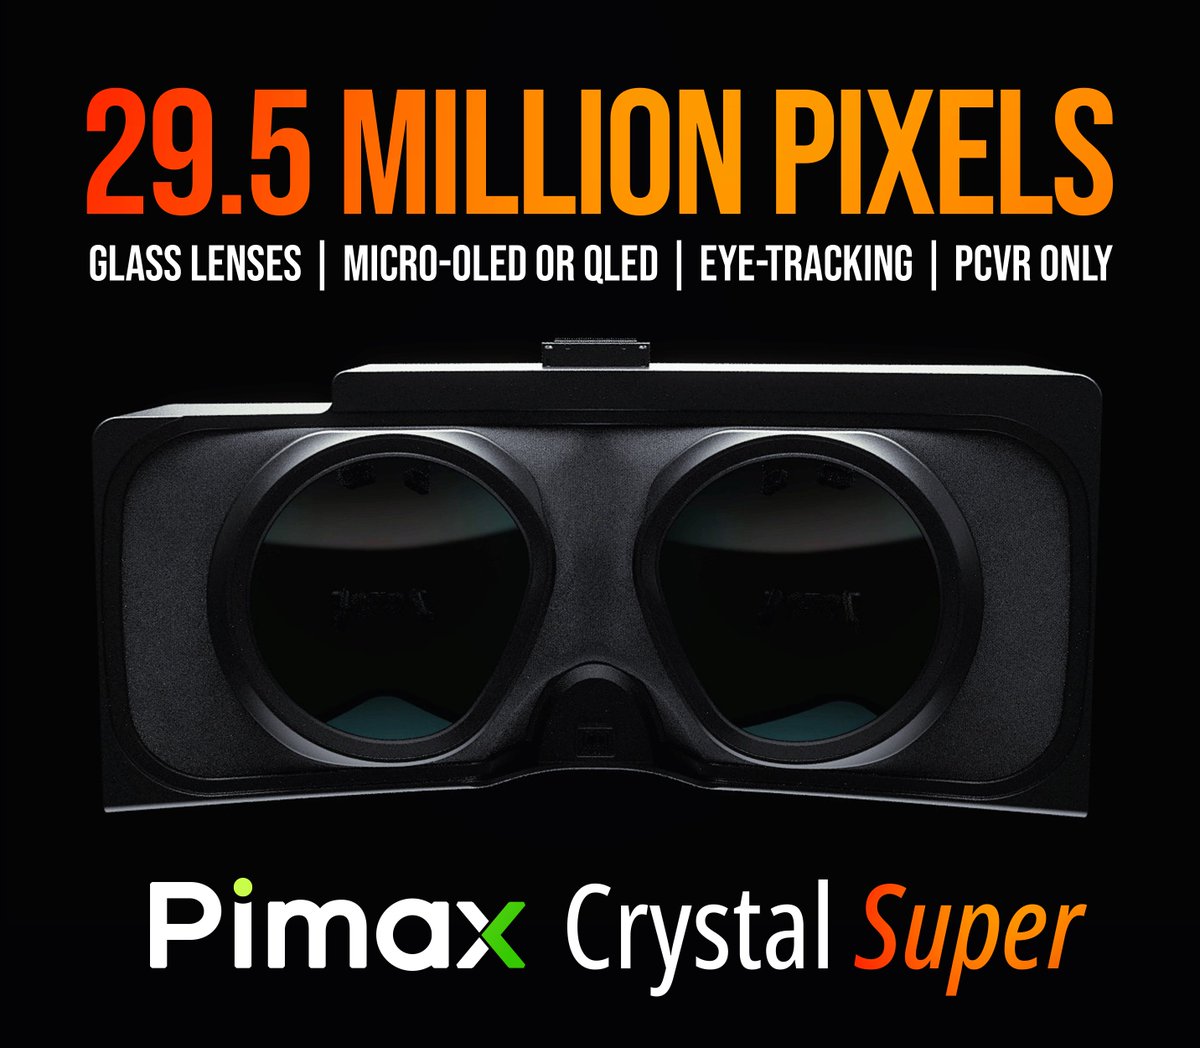 29.5 million pixels. Hello Super. pimax.com/frontier/